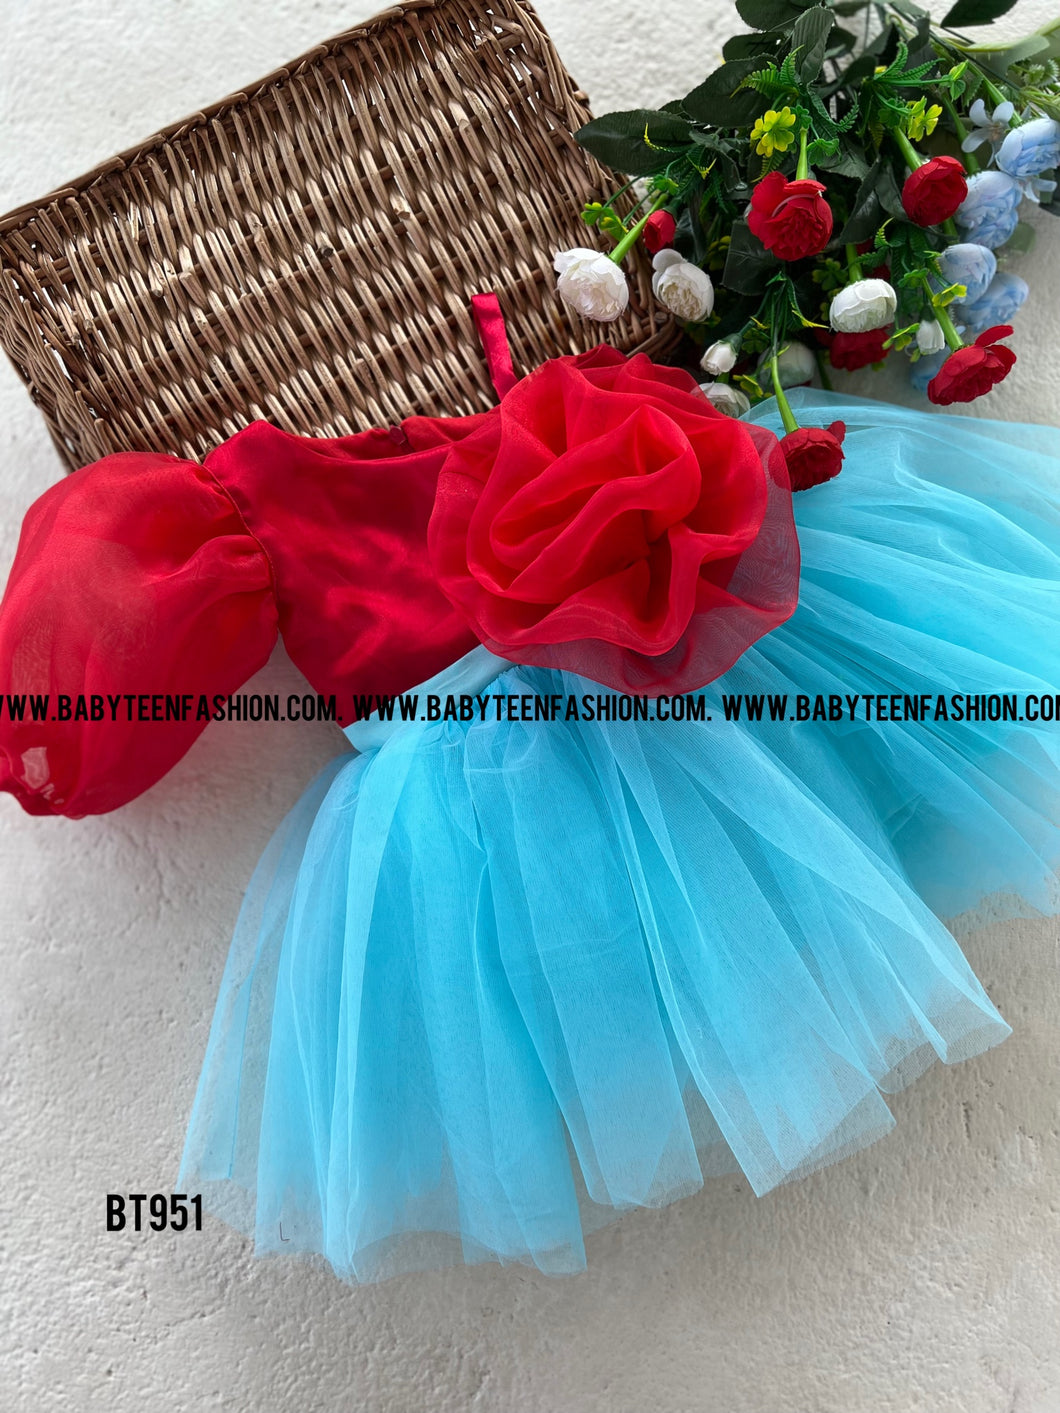 BT951 Crimson Bloom Sky Dance Dress – Twirl into Joy